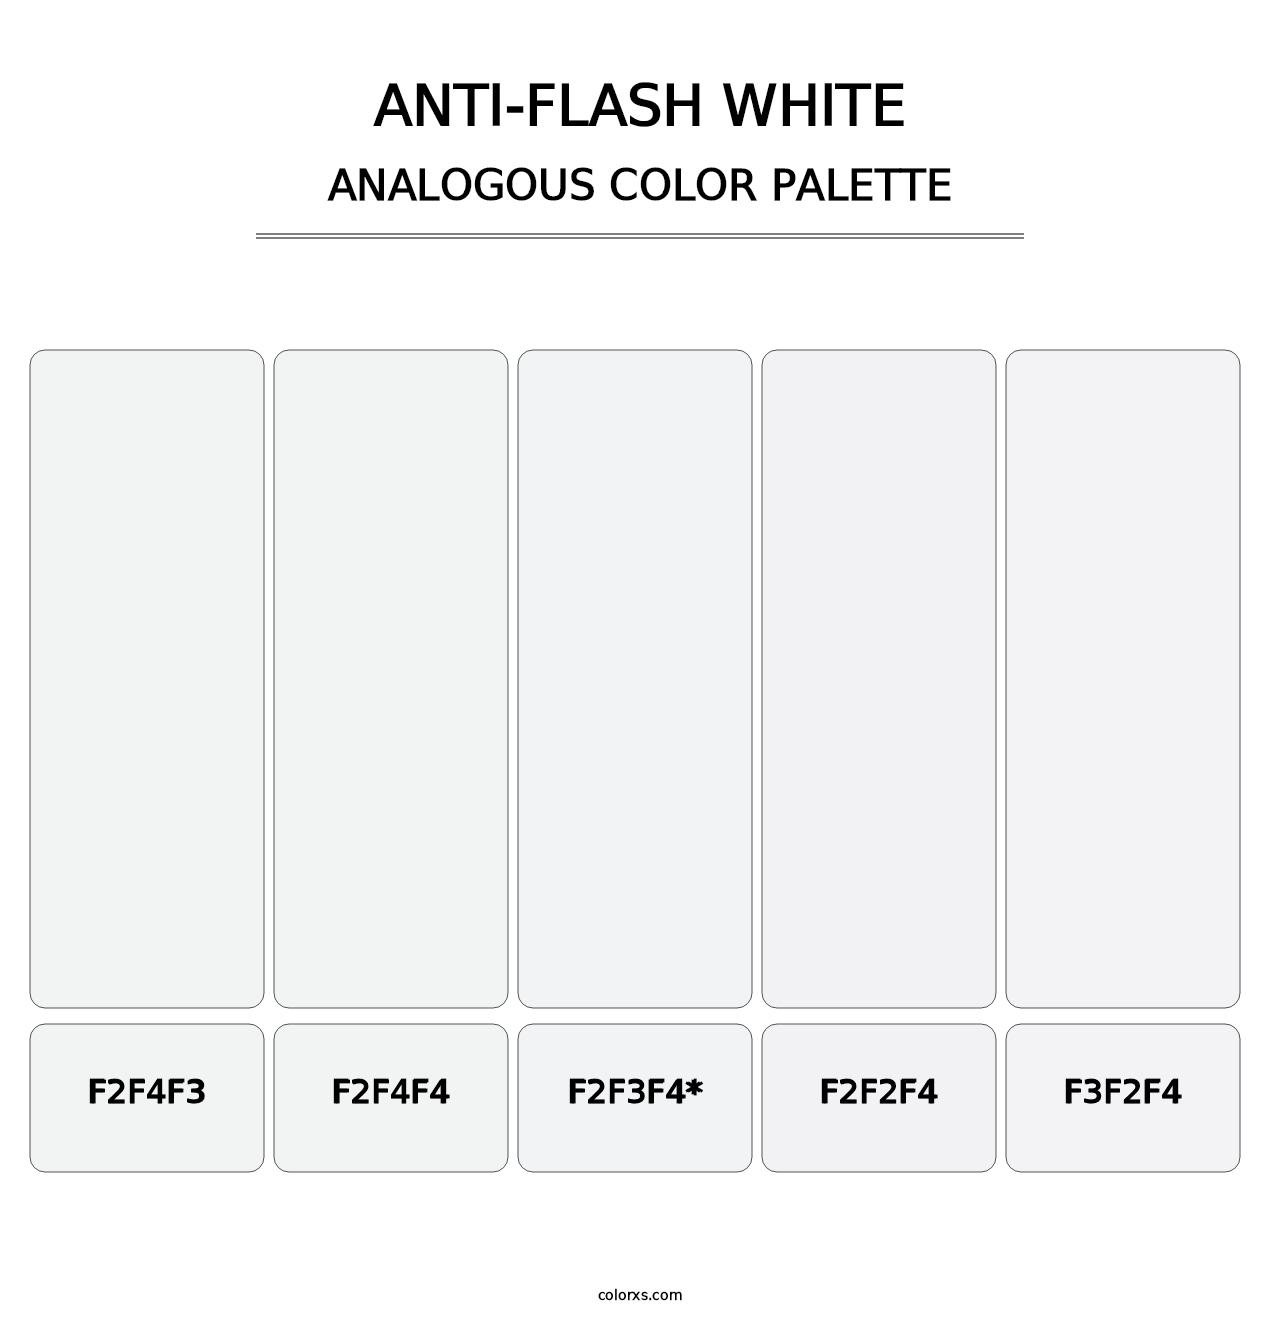 Anti-flash white - Analogous Color Palette